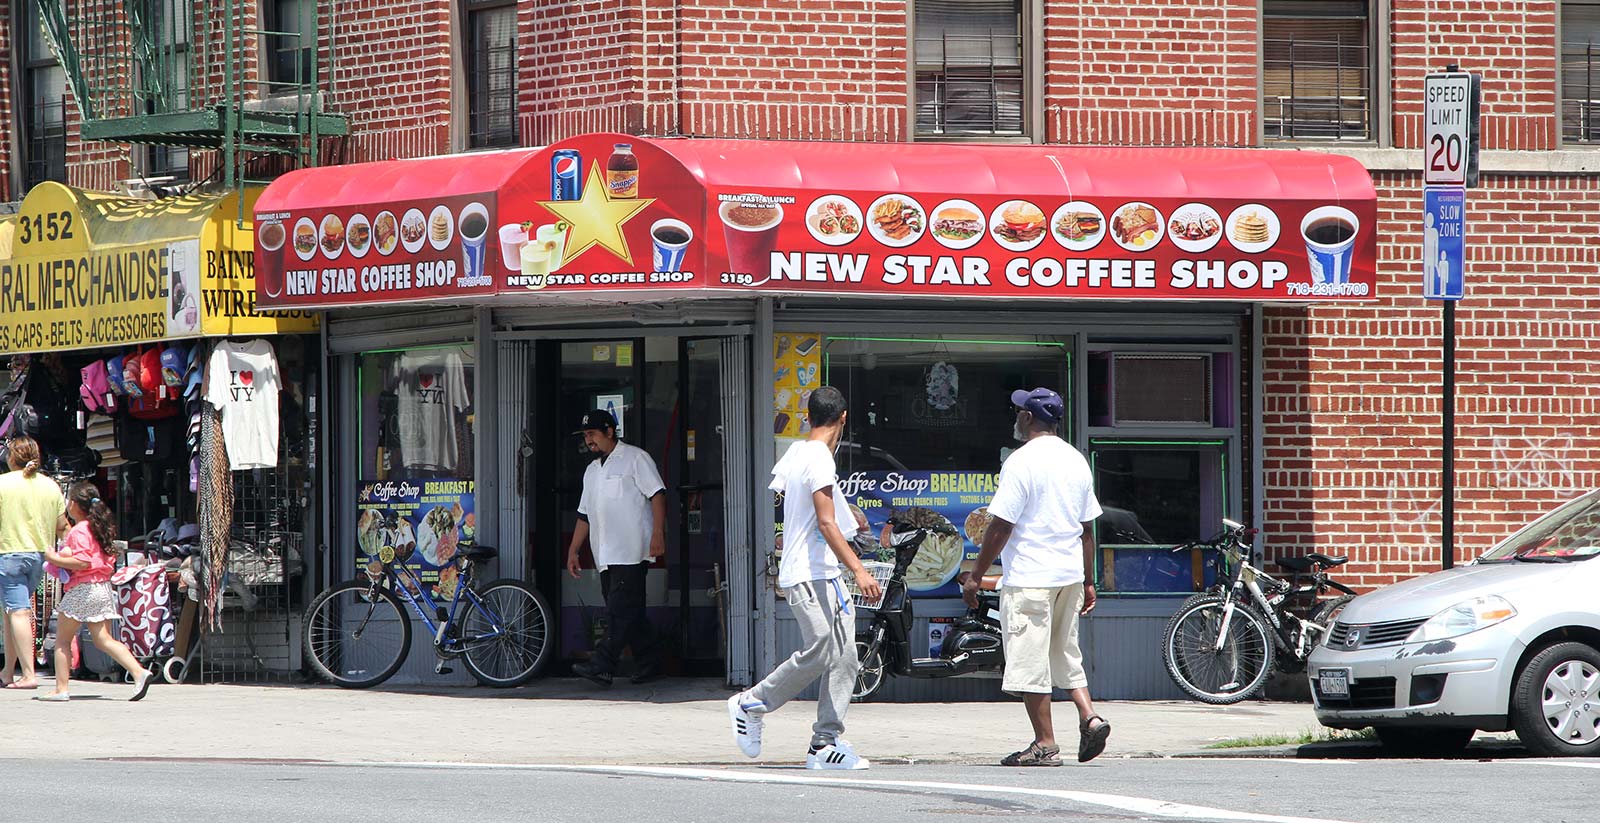 New Star Coffee Shop